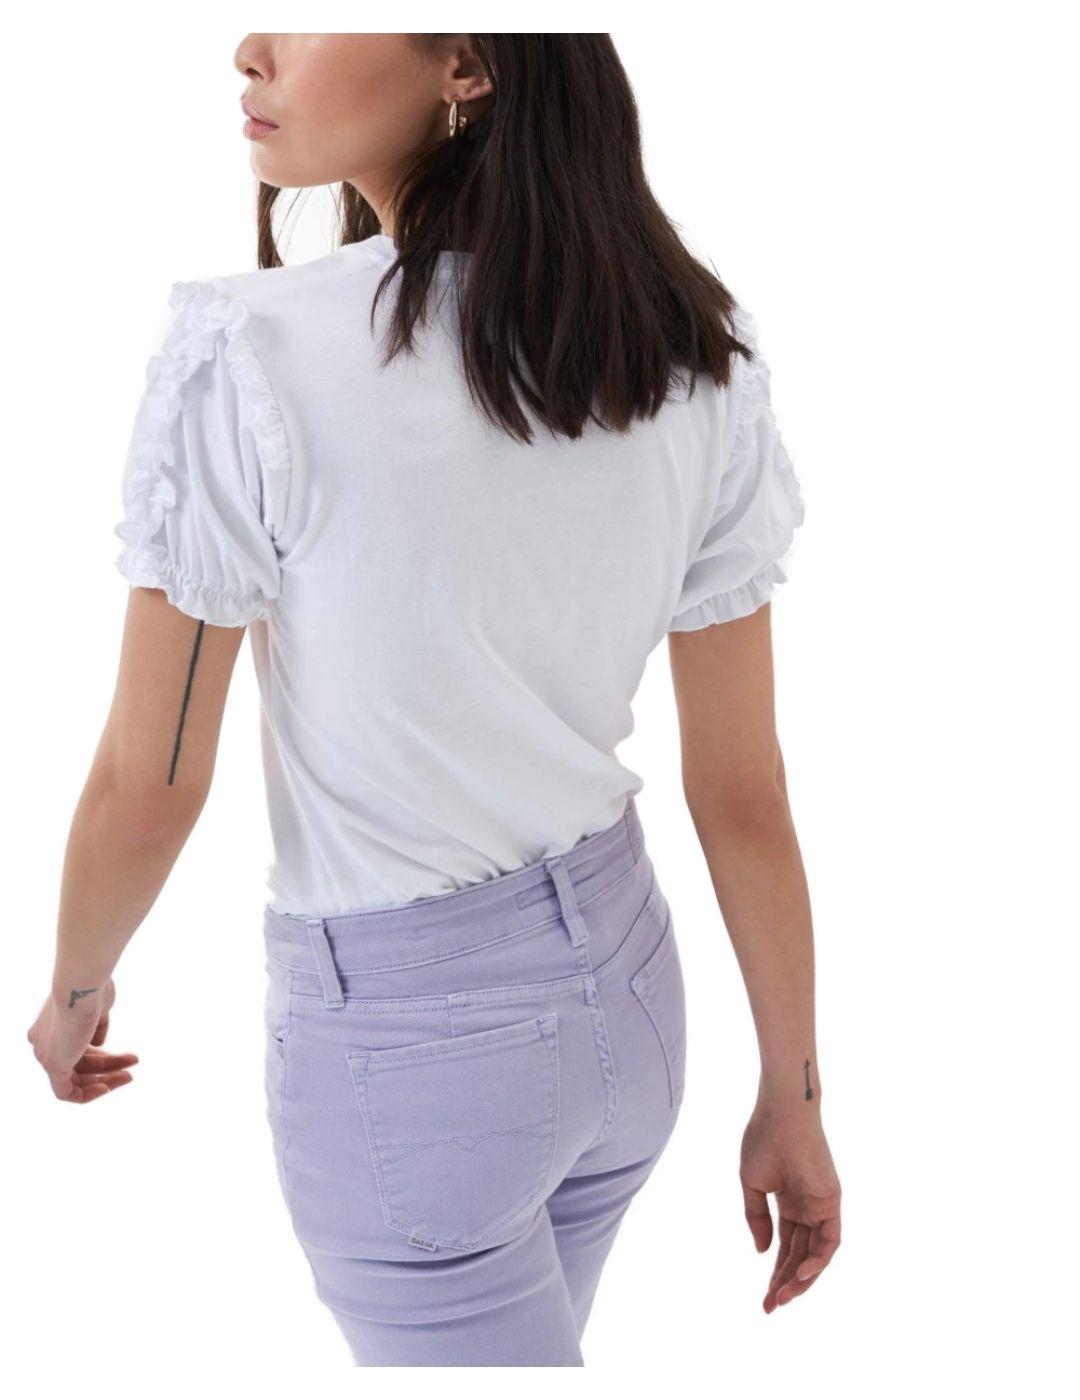 Camiseta logo Salsa blanca para mujer -a